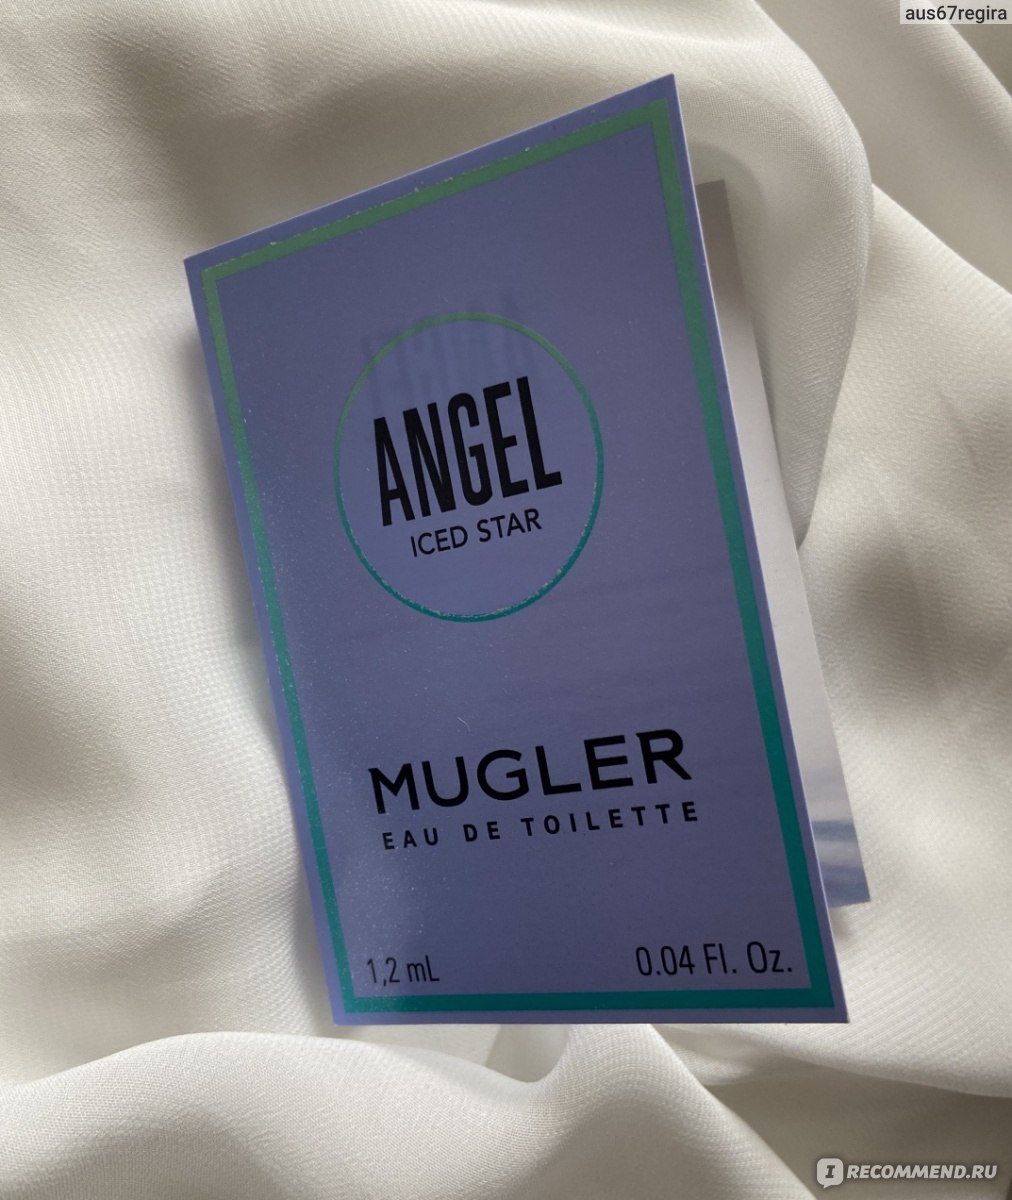 Thierry Mugler Angel Iced Star фото